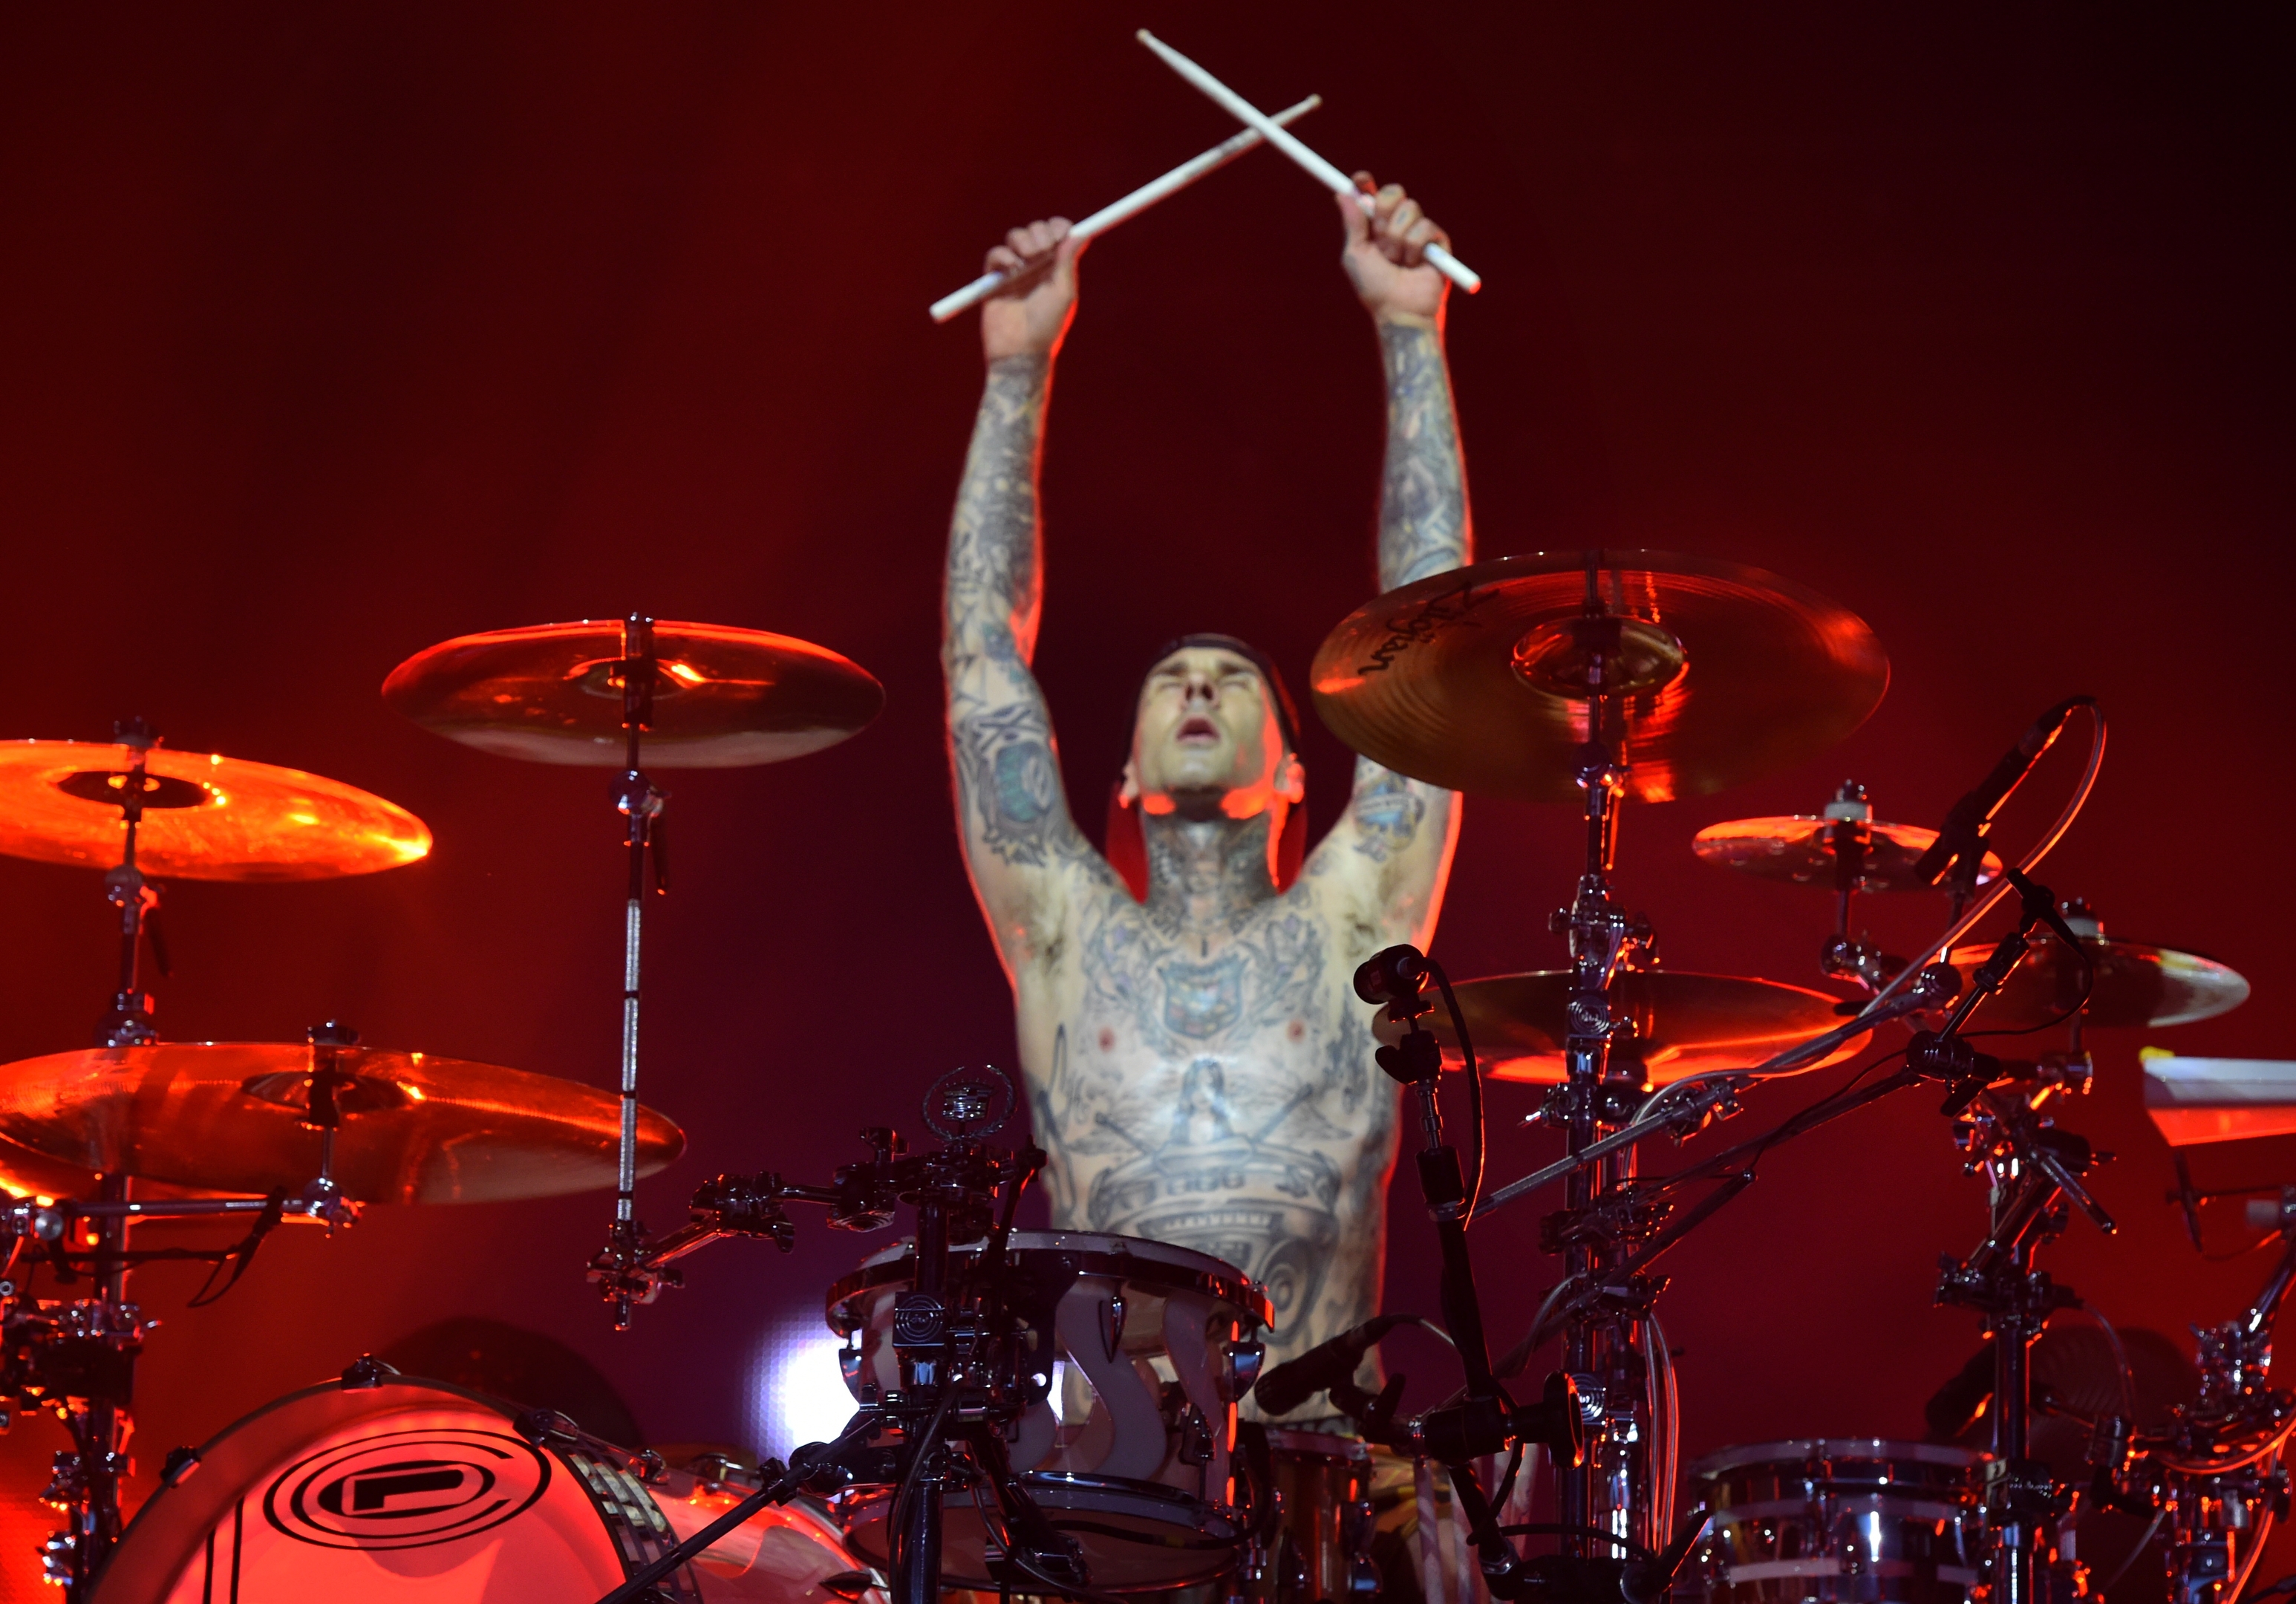 Drummer and vocalist, Travis Barker.
Picture by Jim Irvine